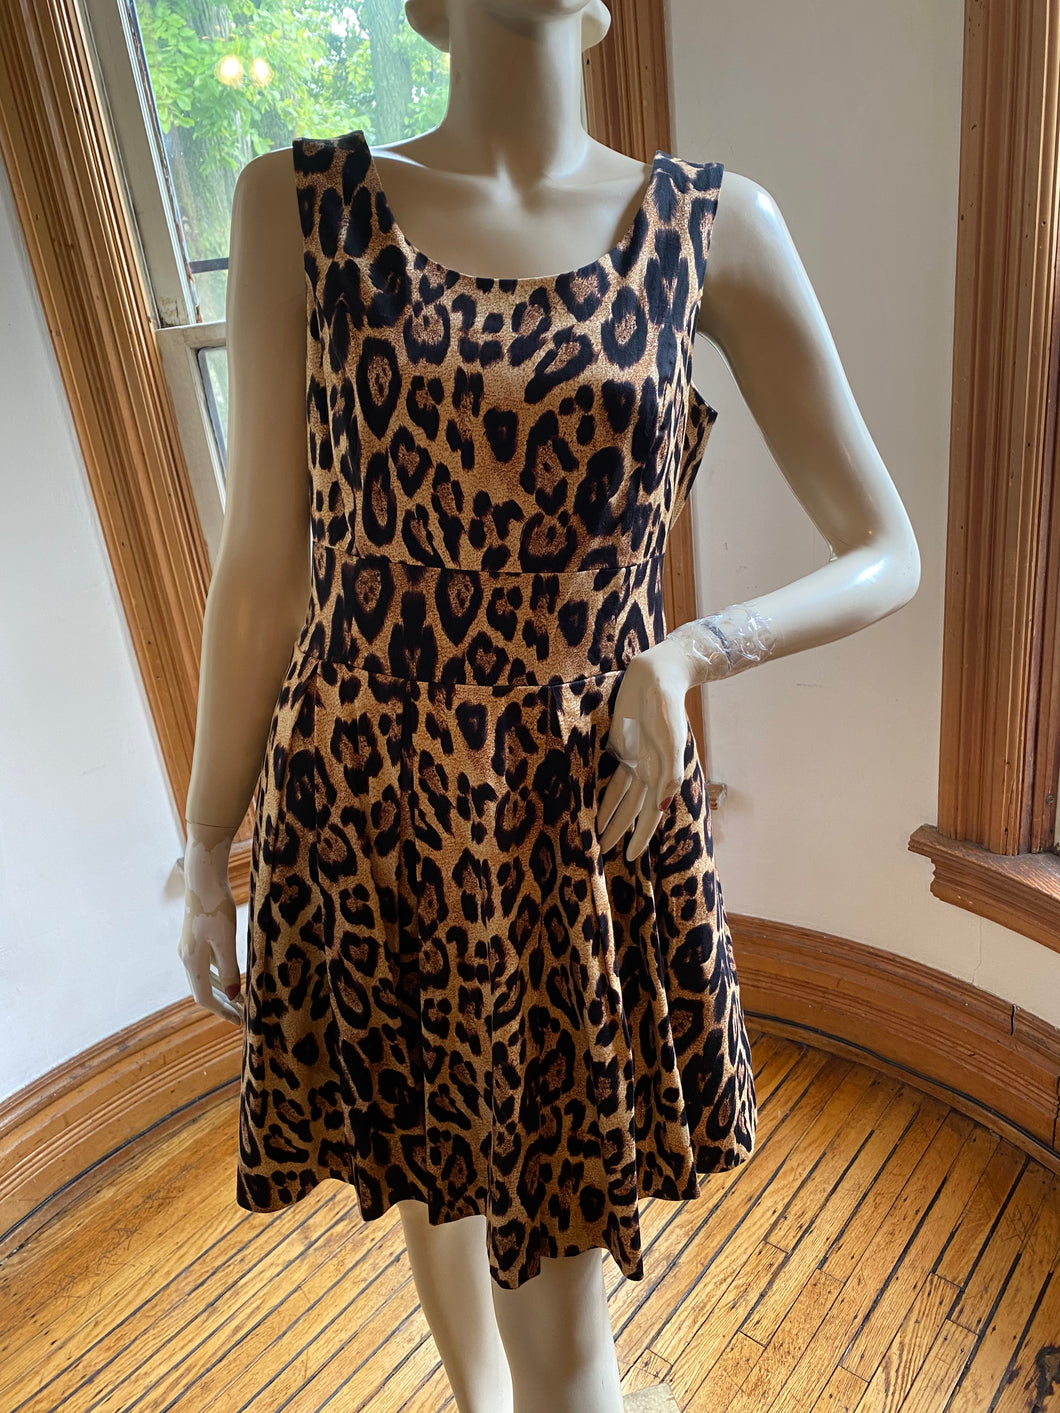 Pink Tartan Sleeveless Leopard Print Dress, size S/M (Canadian size 6)